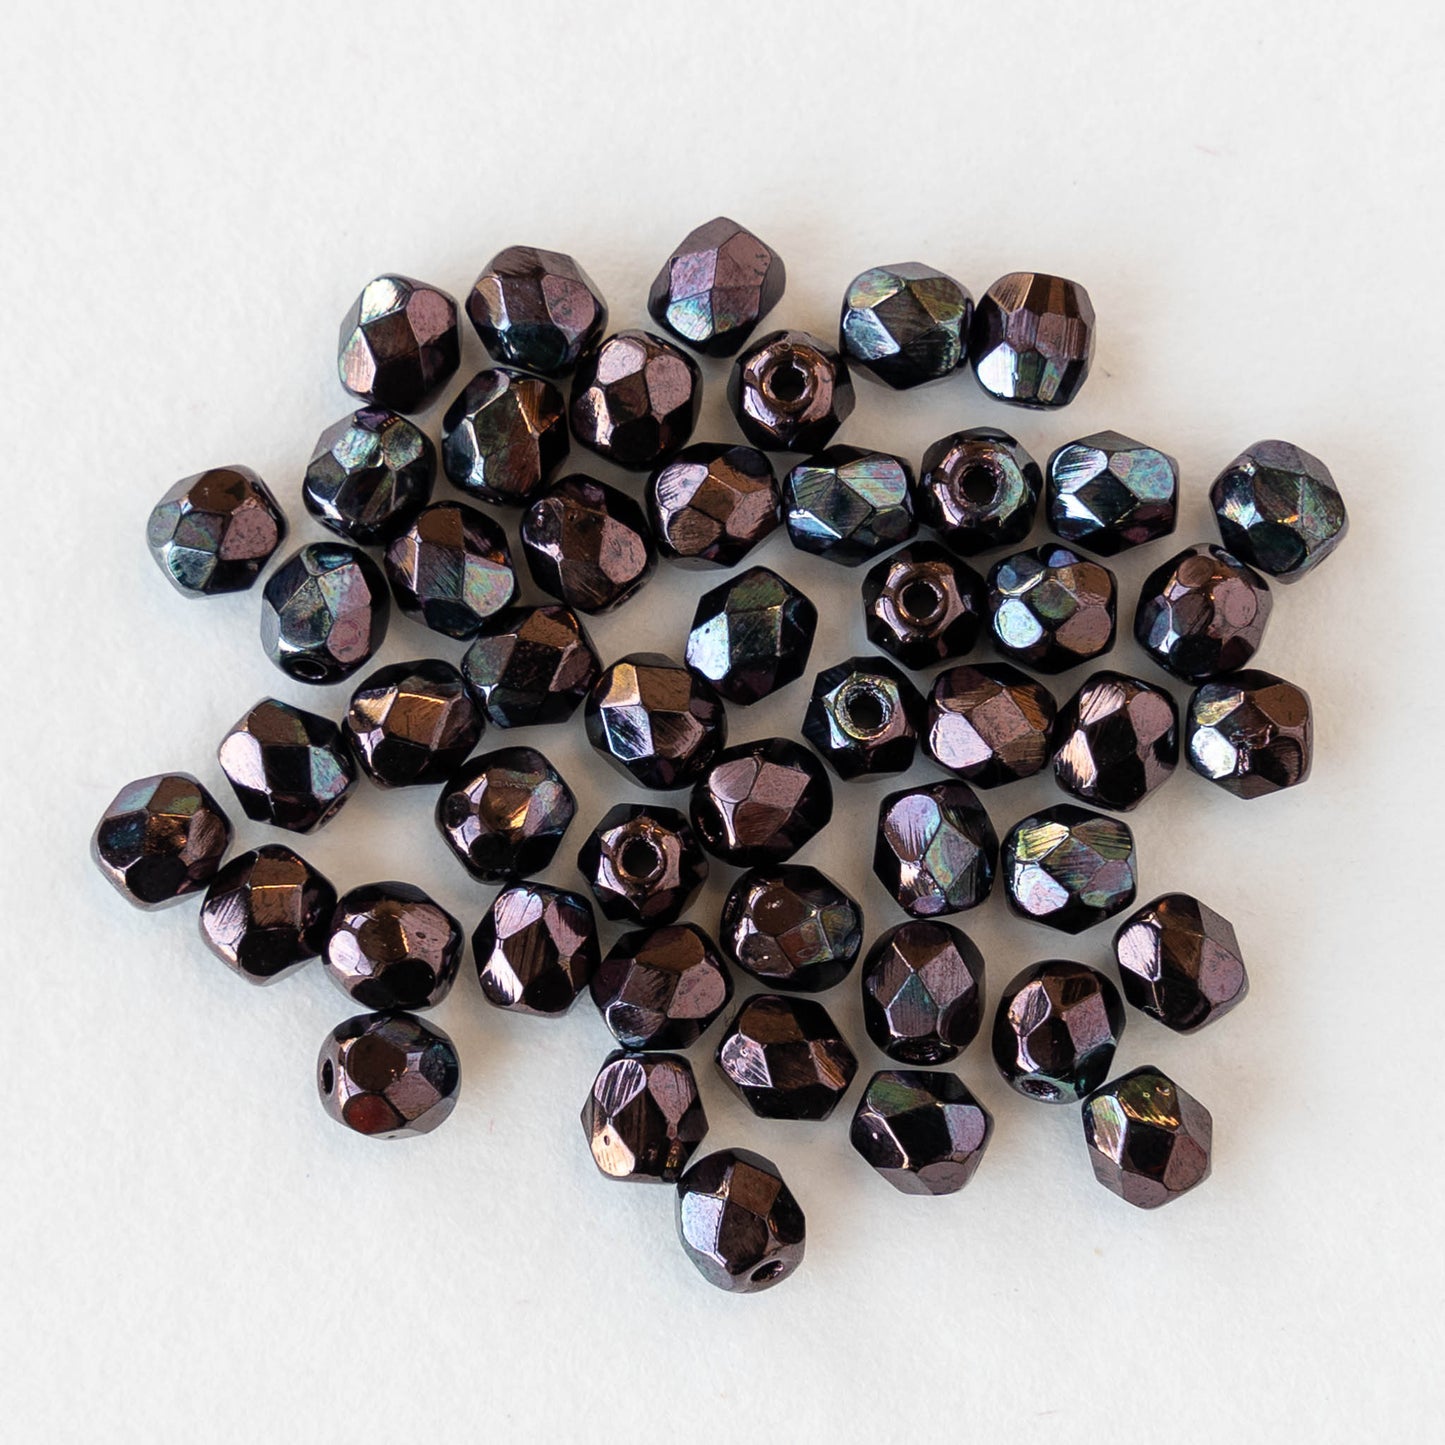 4mm Round Beads Firepolished - Metallic Amethyst Purple Luster - 50 Beads